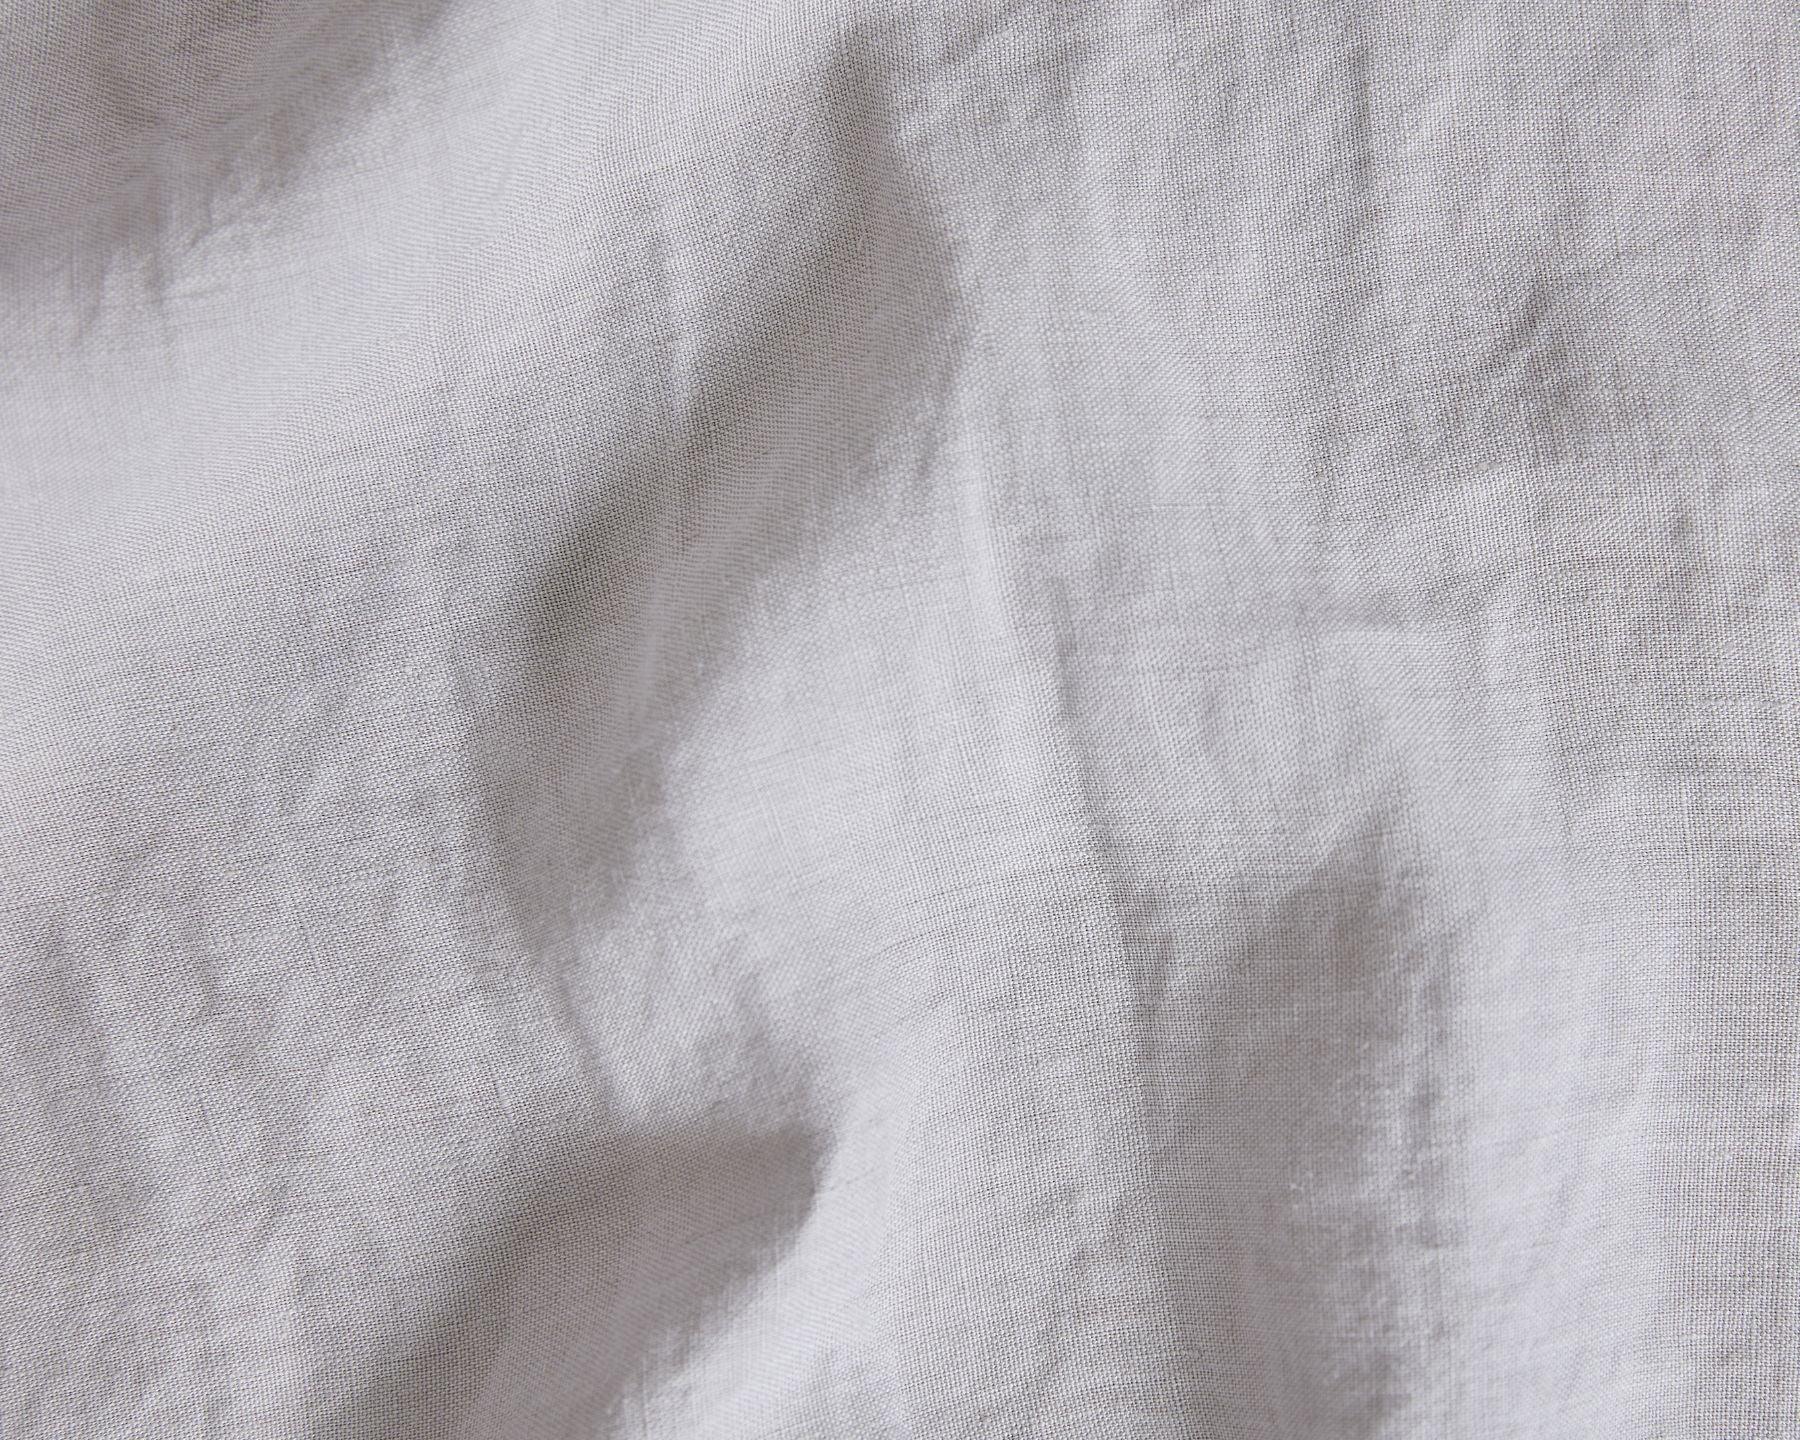 Organic linen top sheet from premium European flax. Light grey color.